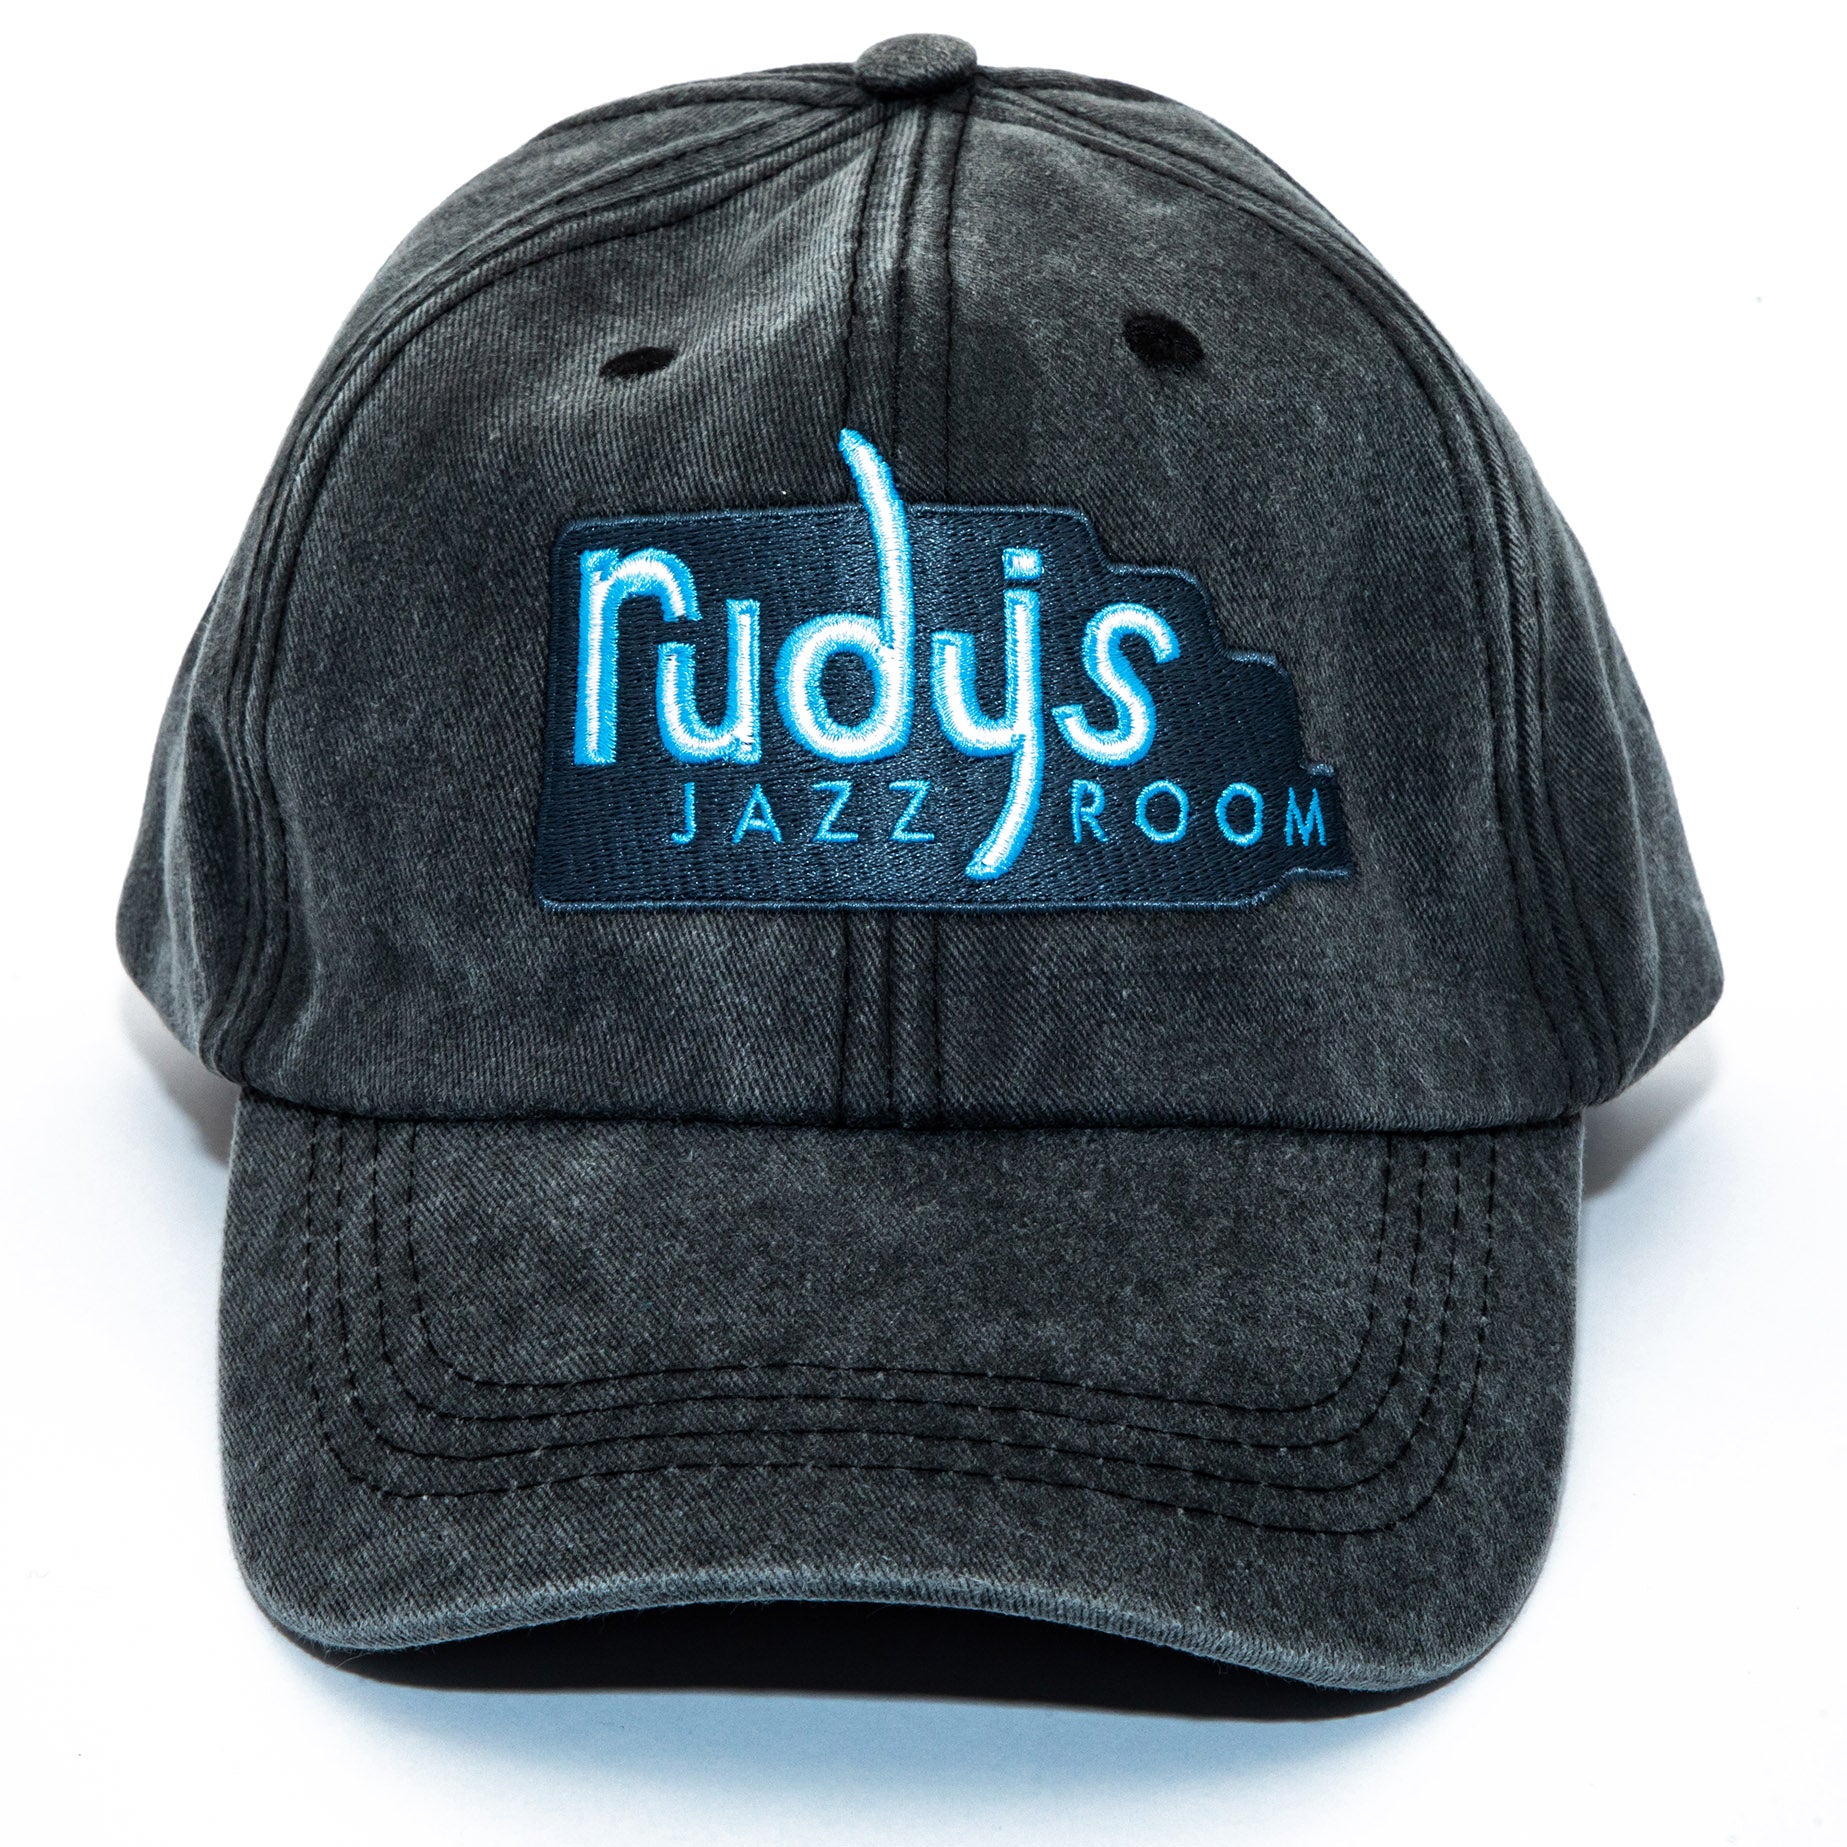 Rudy's Baseball Hat